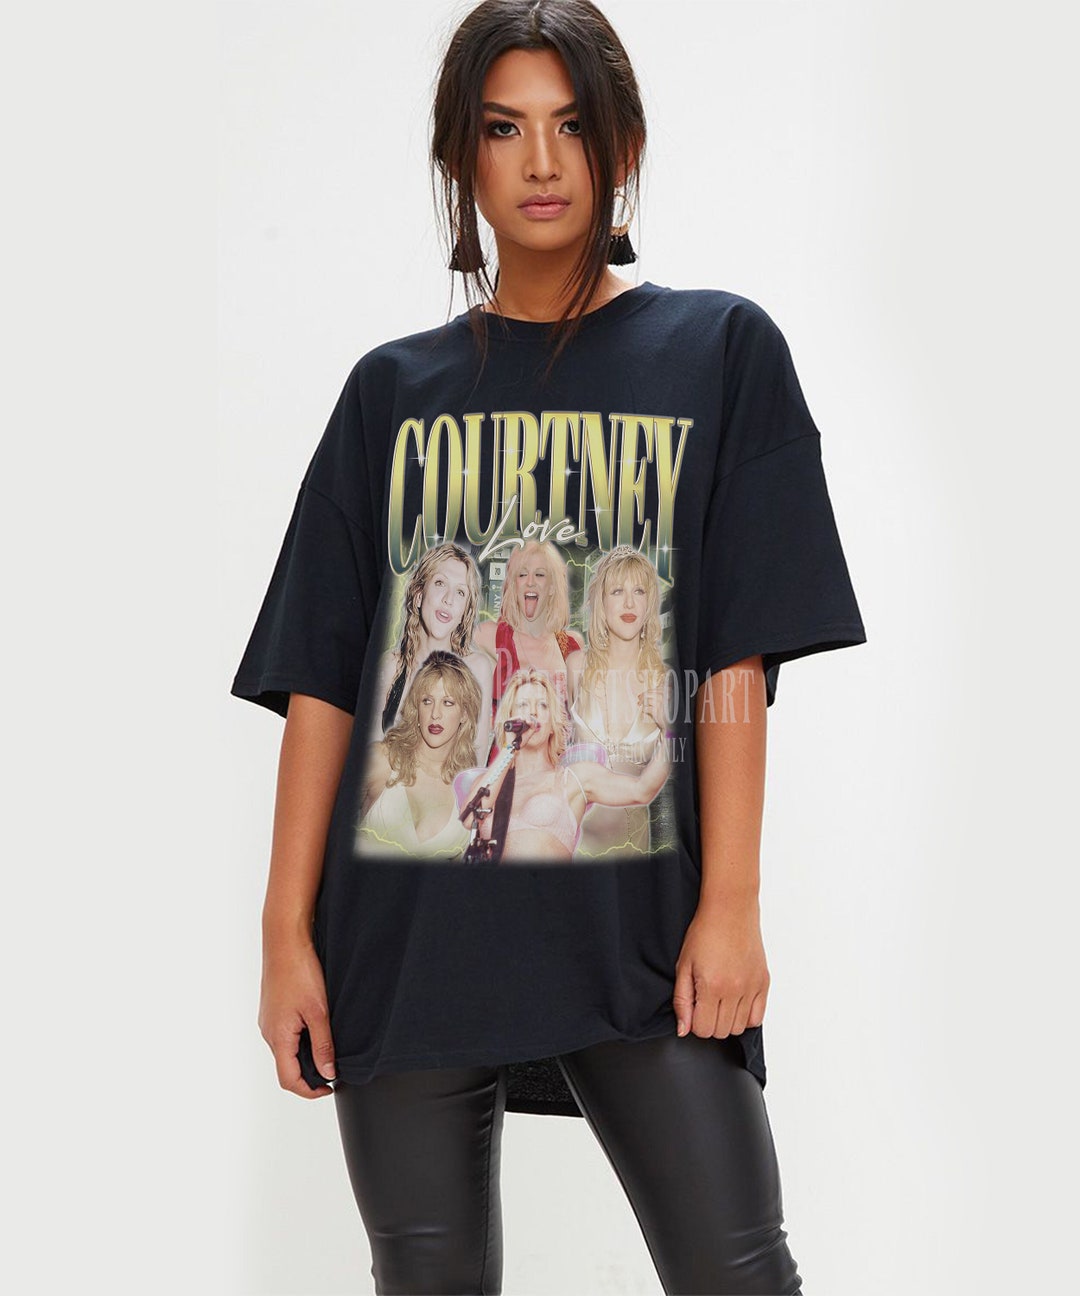 COURTNEY LOVE Shirt Courtney Love Homage T-shirt Courtney - Etsy